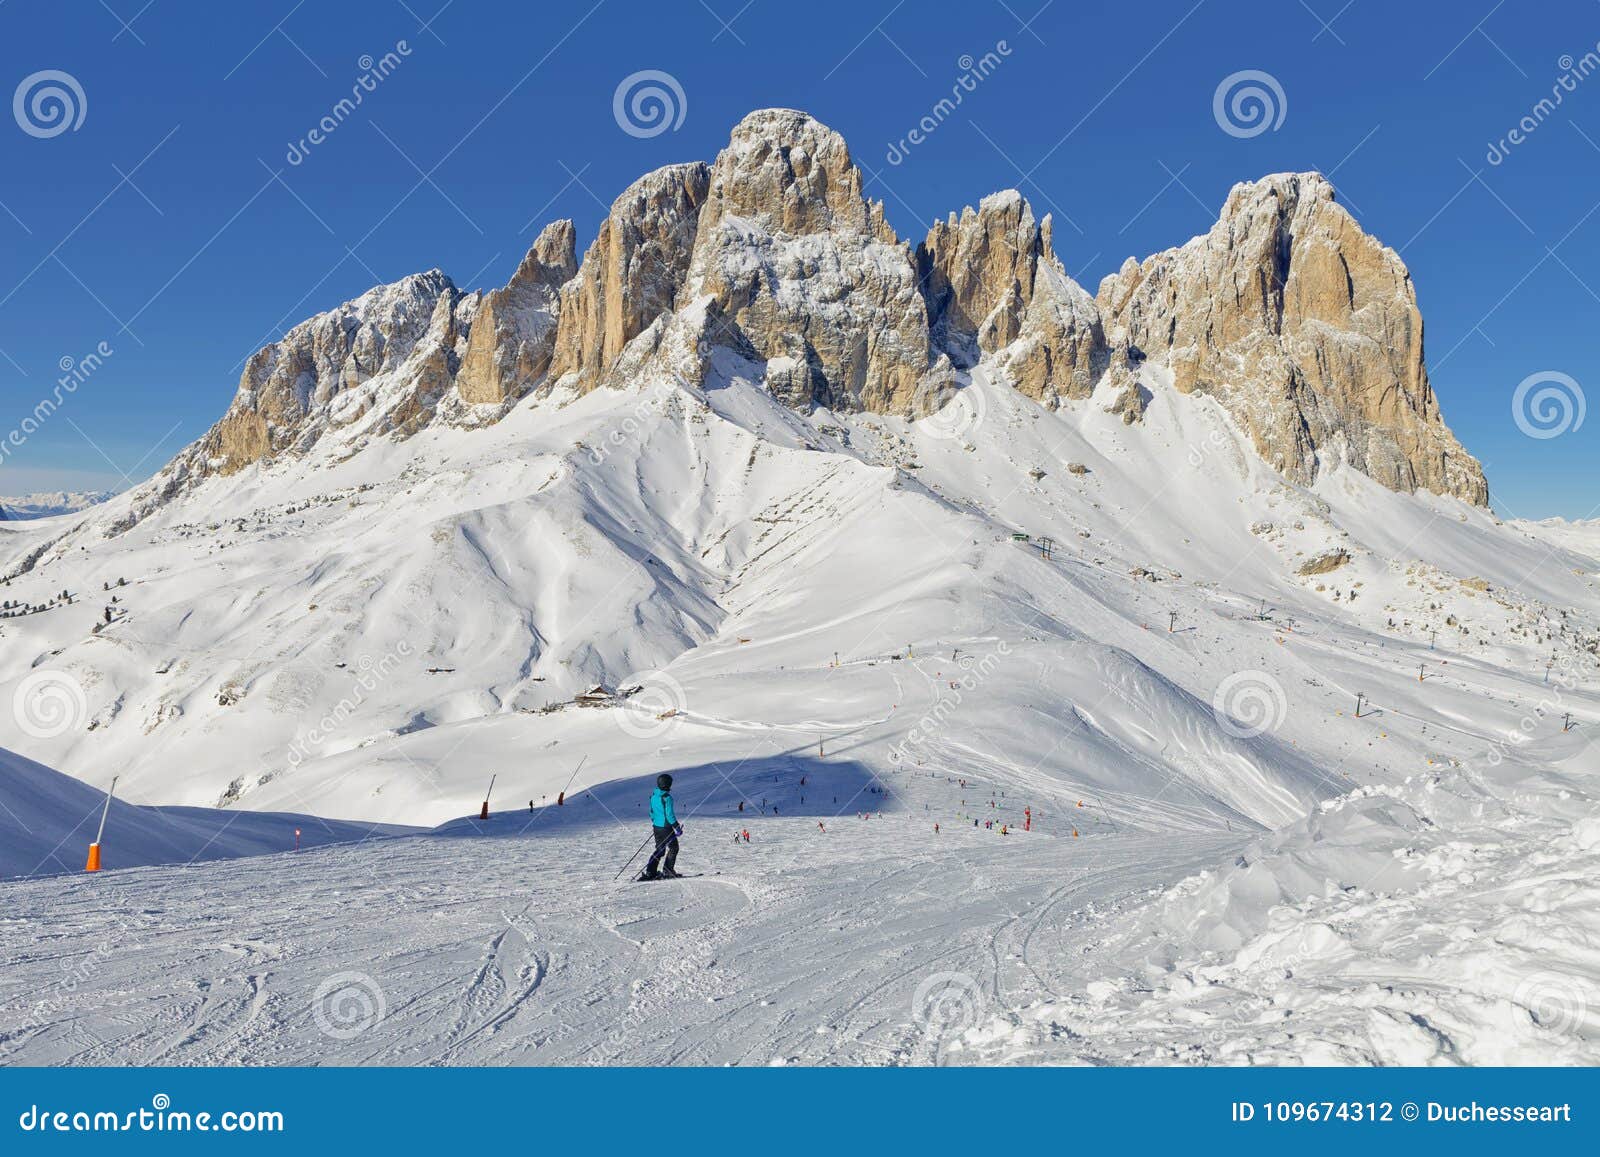 view of the sassolungo langkofel group of the italian dolomites from the val di fassa ski area, trentino-alto-adige region, italy